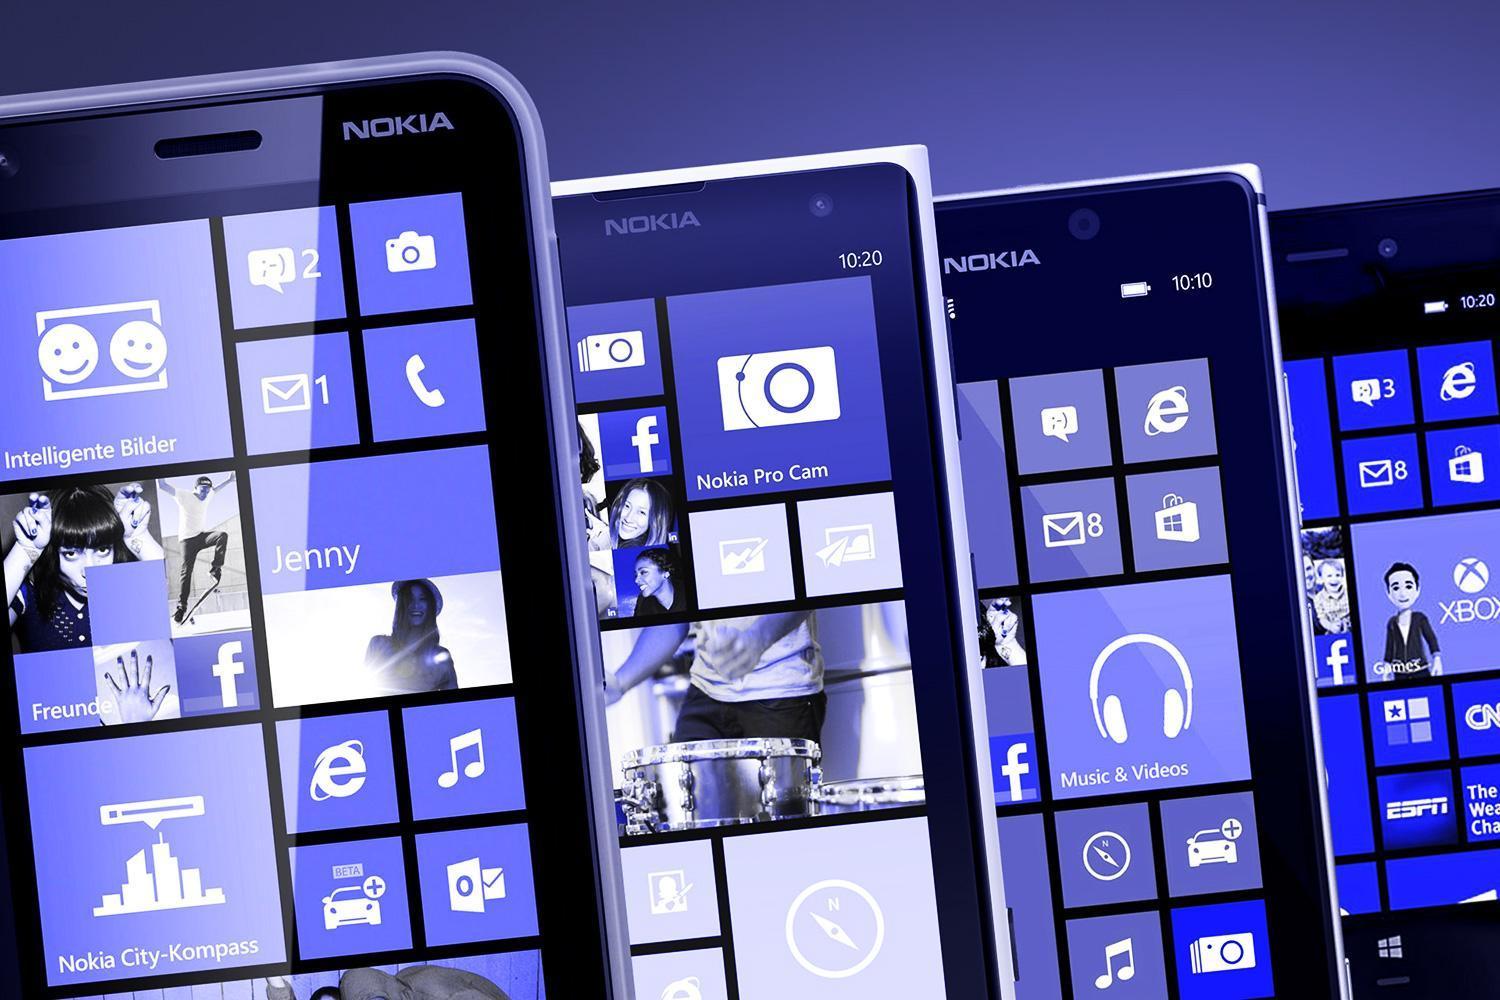 Windows Phone sigue “smokeando” smartphones